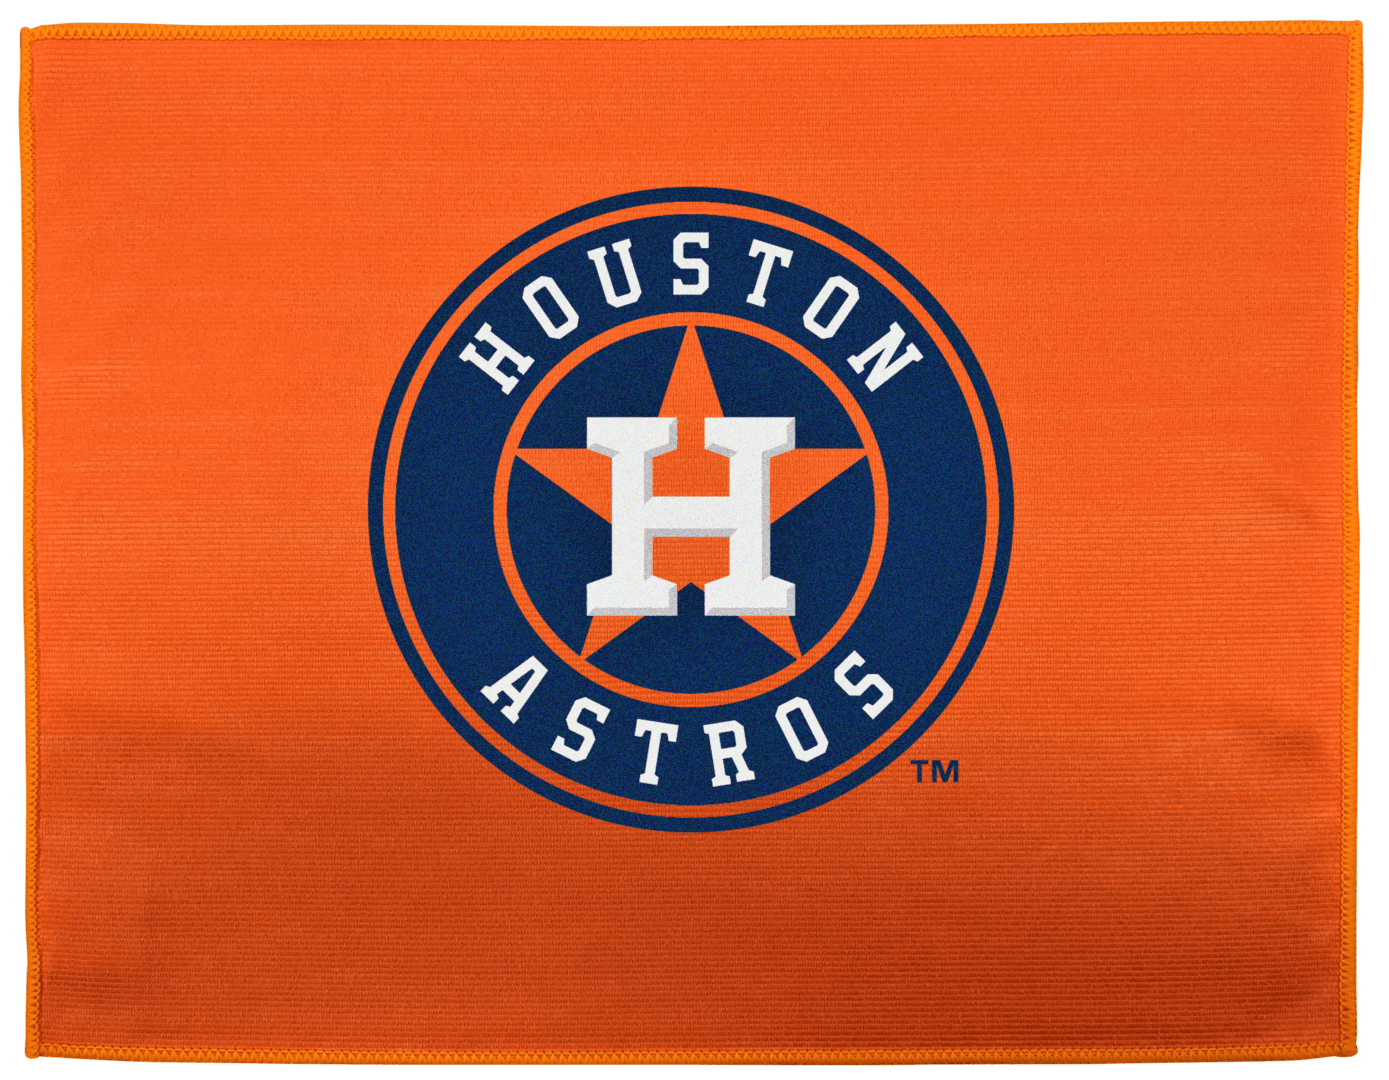 Houston Astros Text on orange color cloth